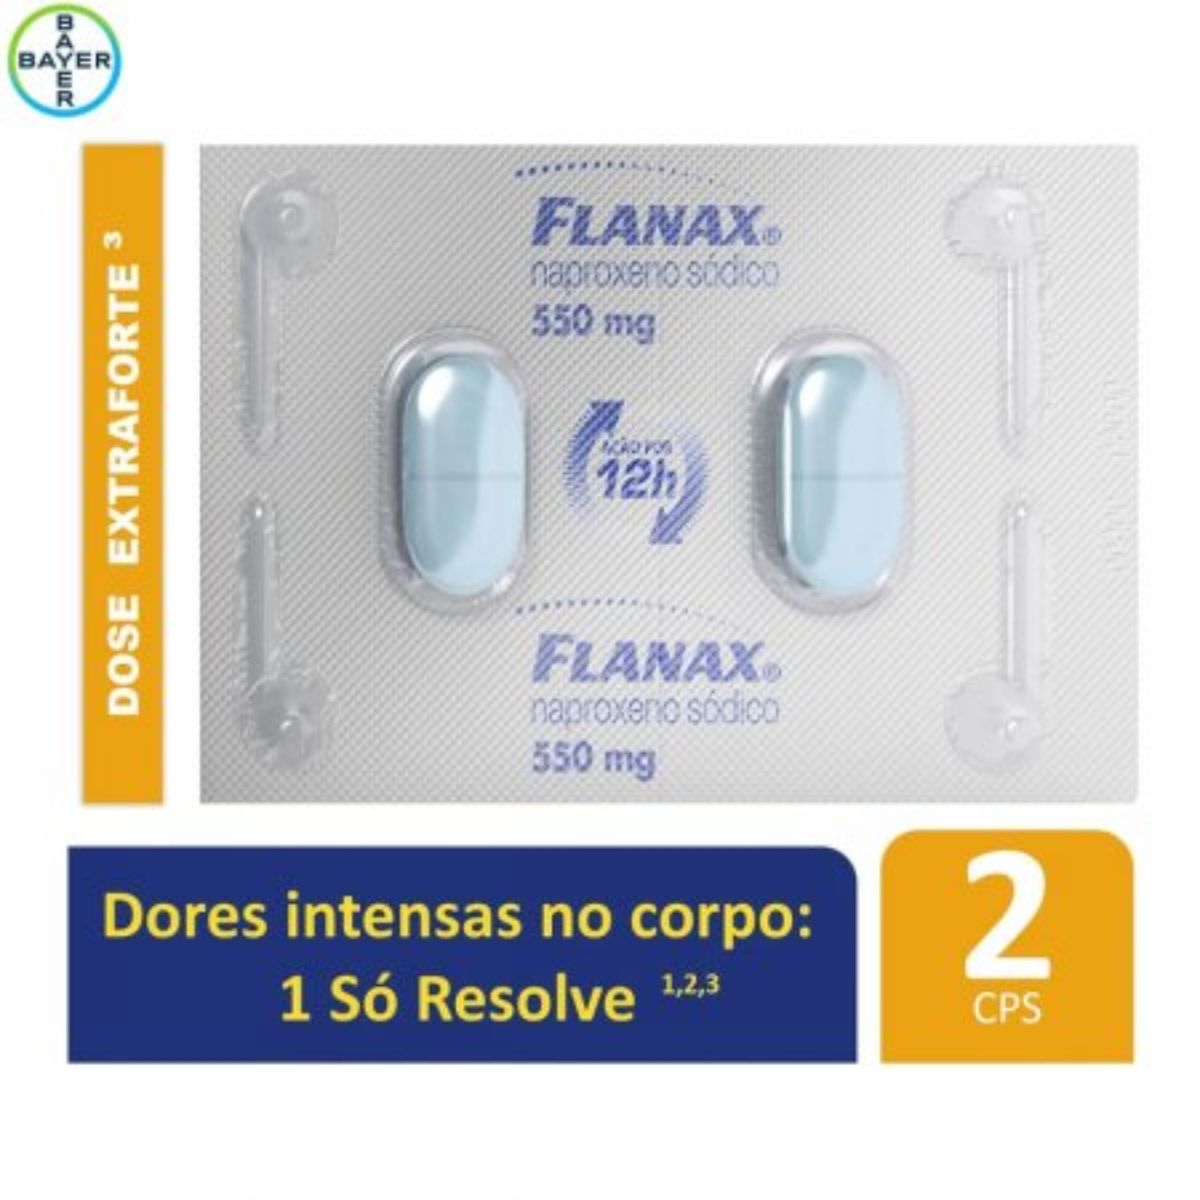 flanax-naproxeno-sodico-550mg-com-2-comprimidos-1.jpg